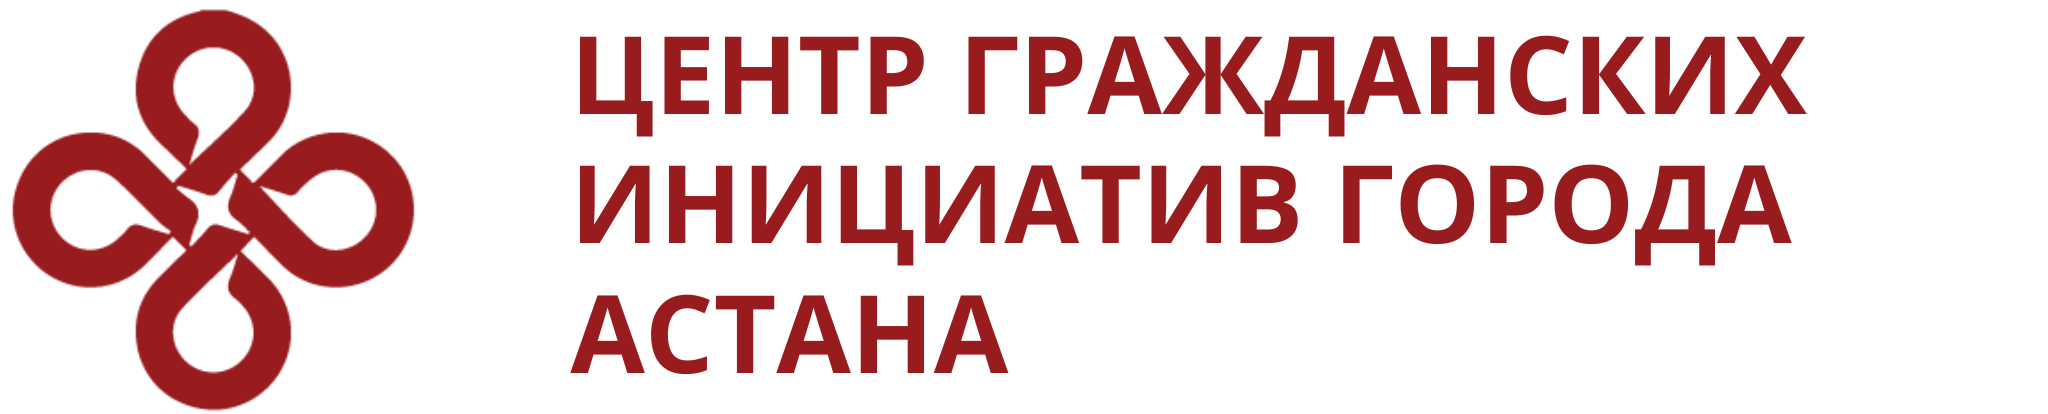 Центр гражданских инициатив города Астана (Russian)